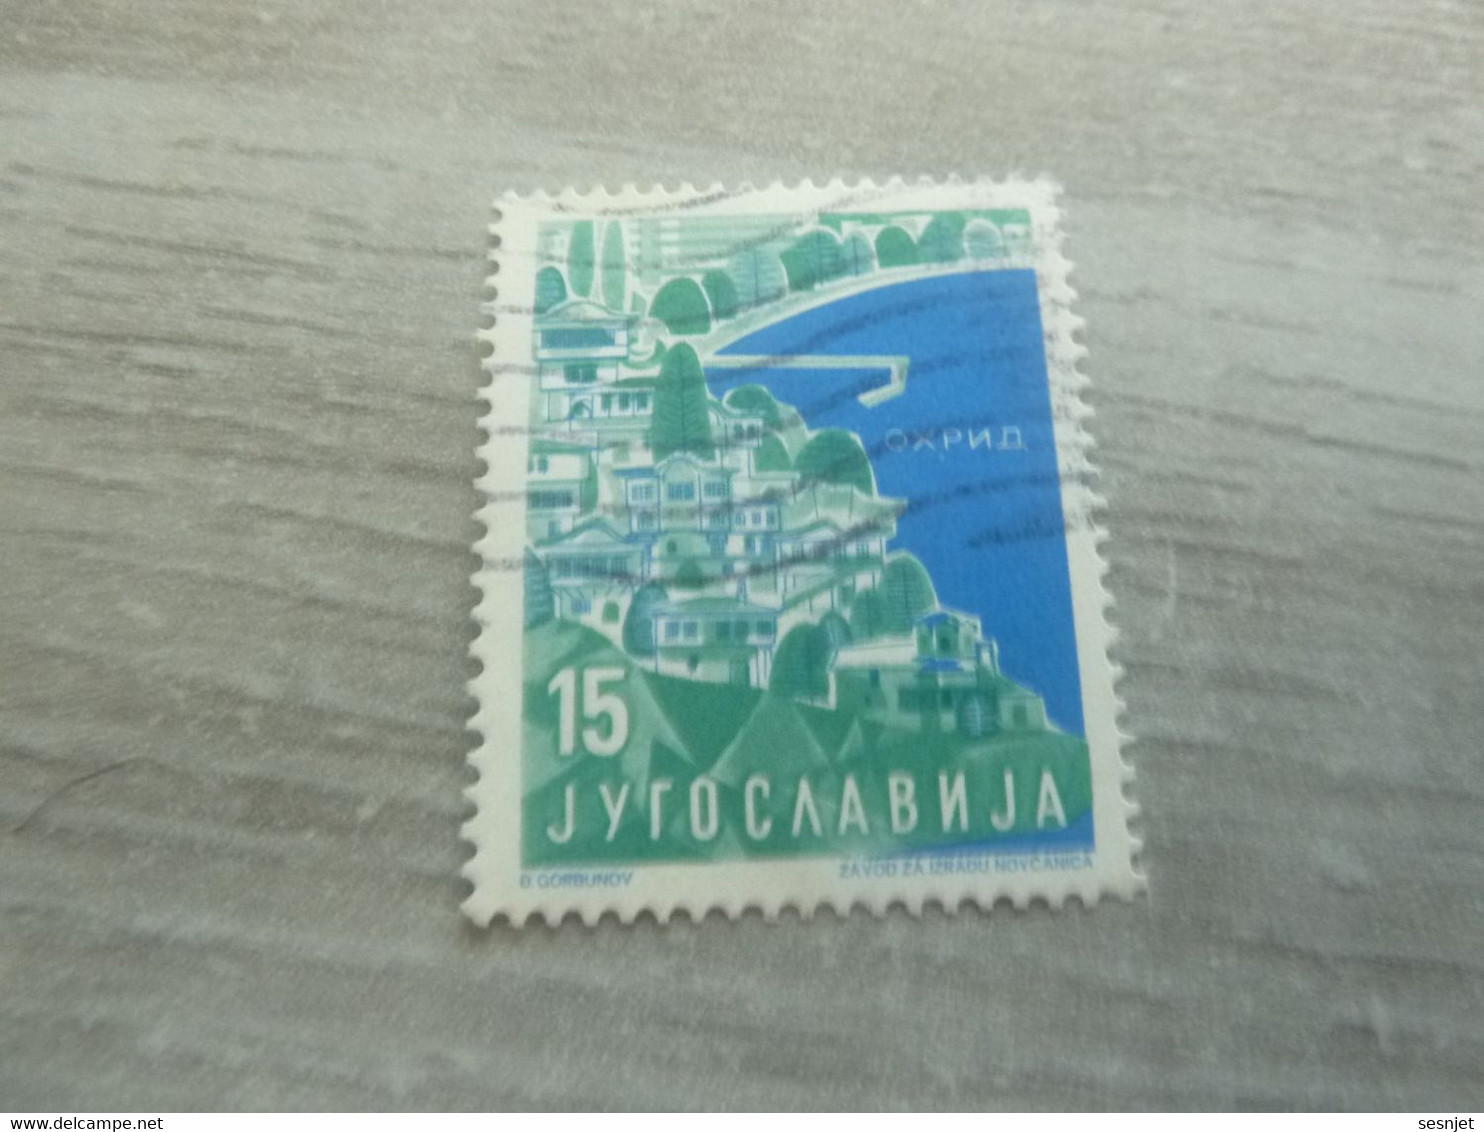 Jyrocaabnja - Oxpno - Corbunov - Val 15 - Gris, Bleu Et Vert - Oblitéré - - Oblitérés